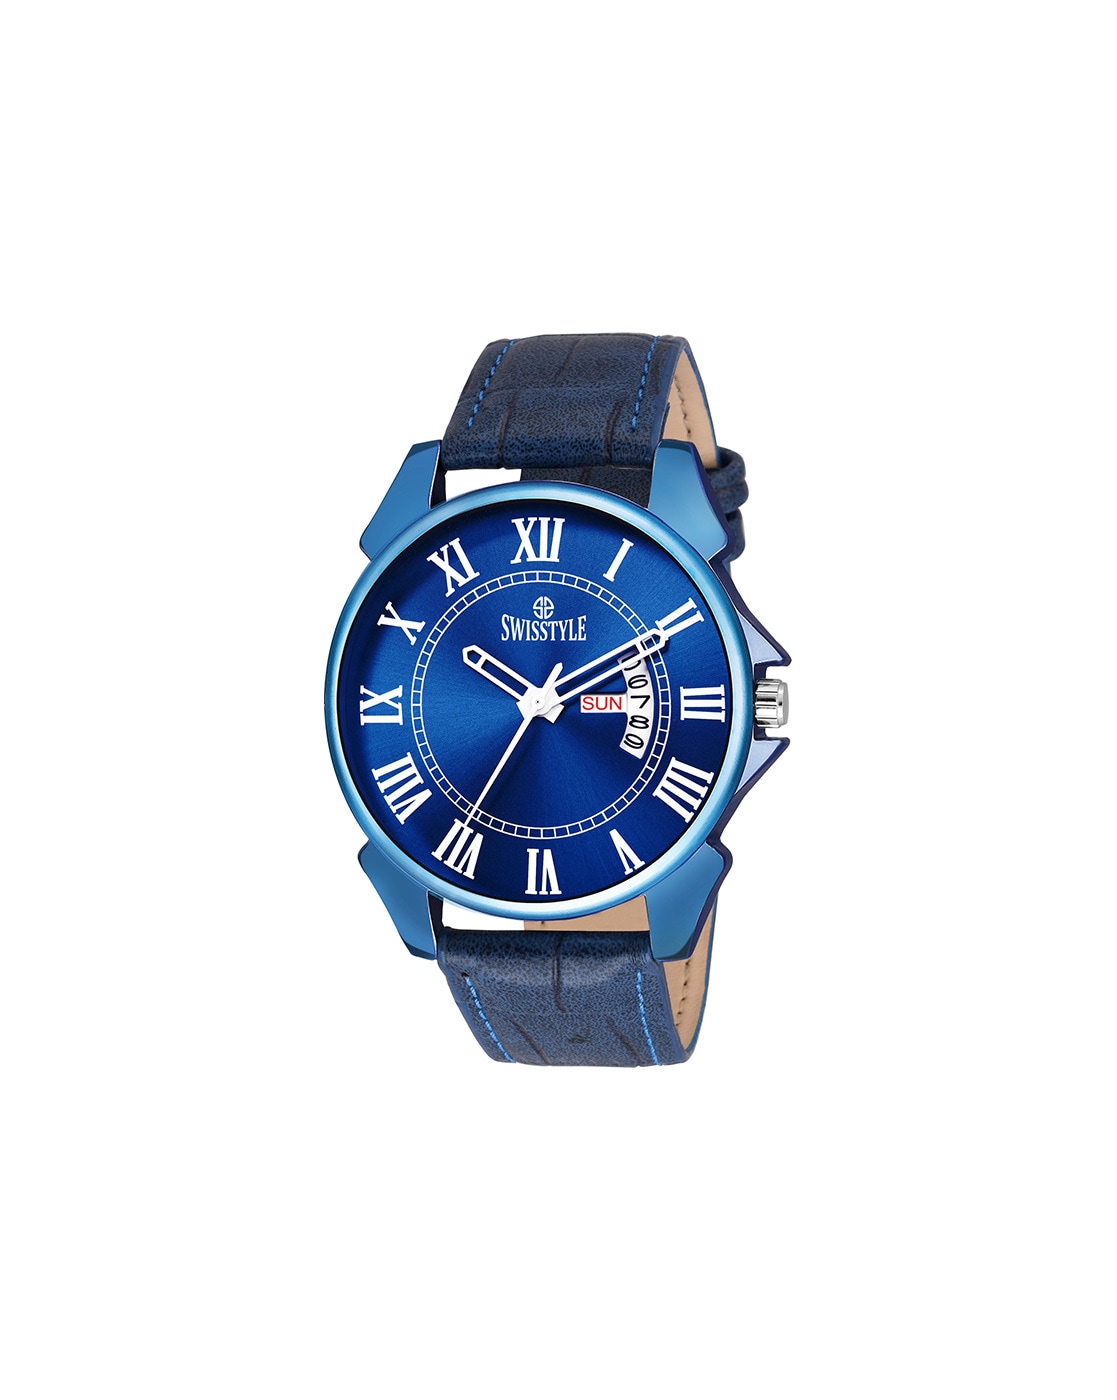 Swisstyle SS-LR003A-WHT-WGCH analog watch for women - Swisstyle Watch |  Watches, Womens watches, Watches online